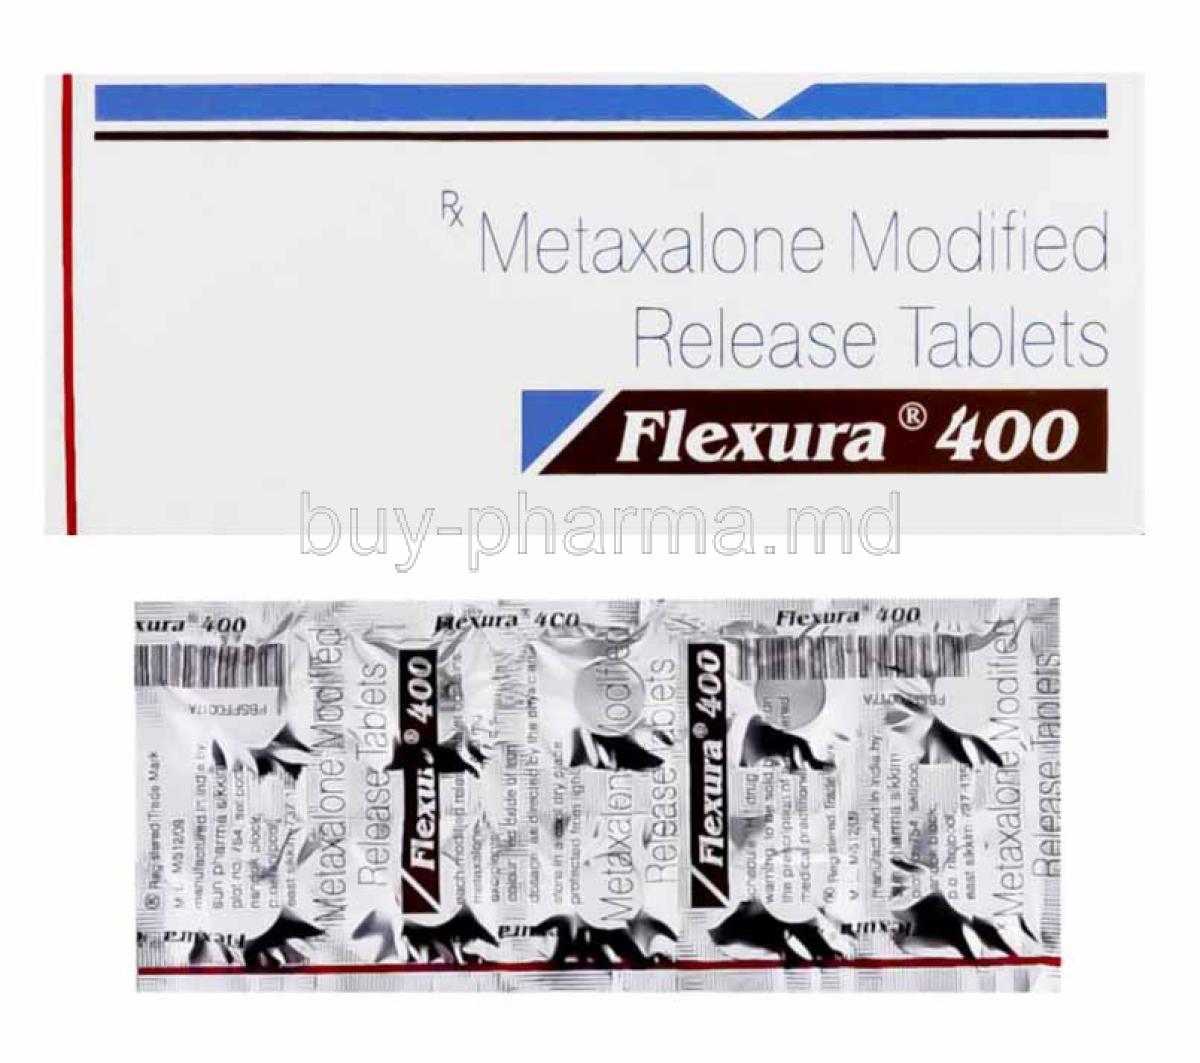 Flexura, Metaxalone box and tablets